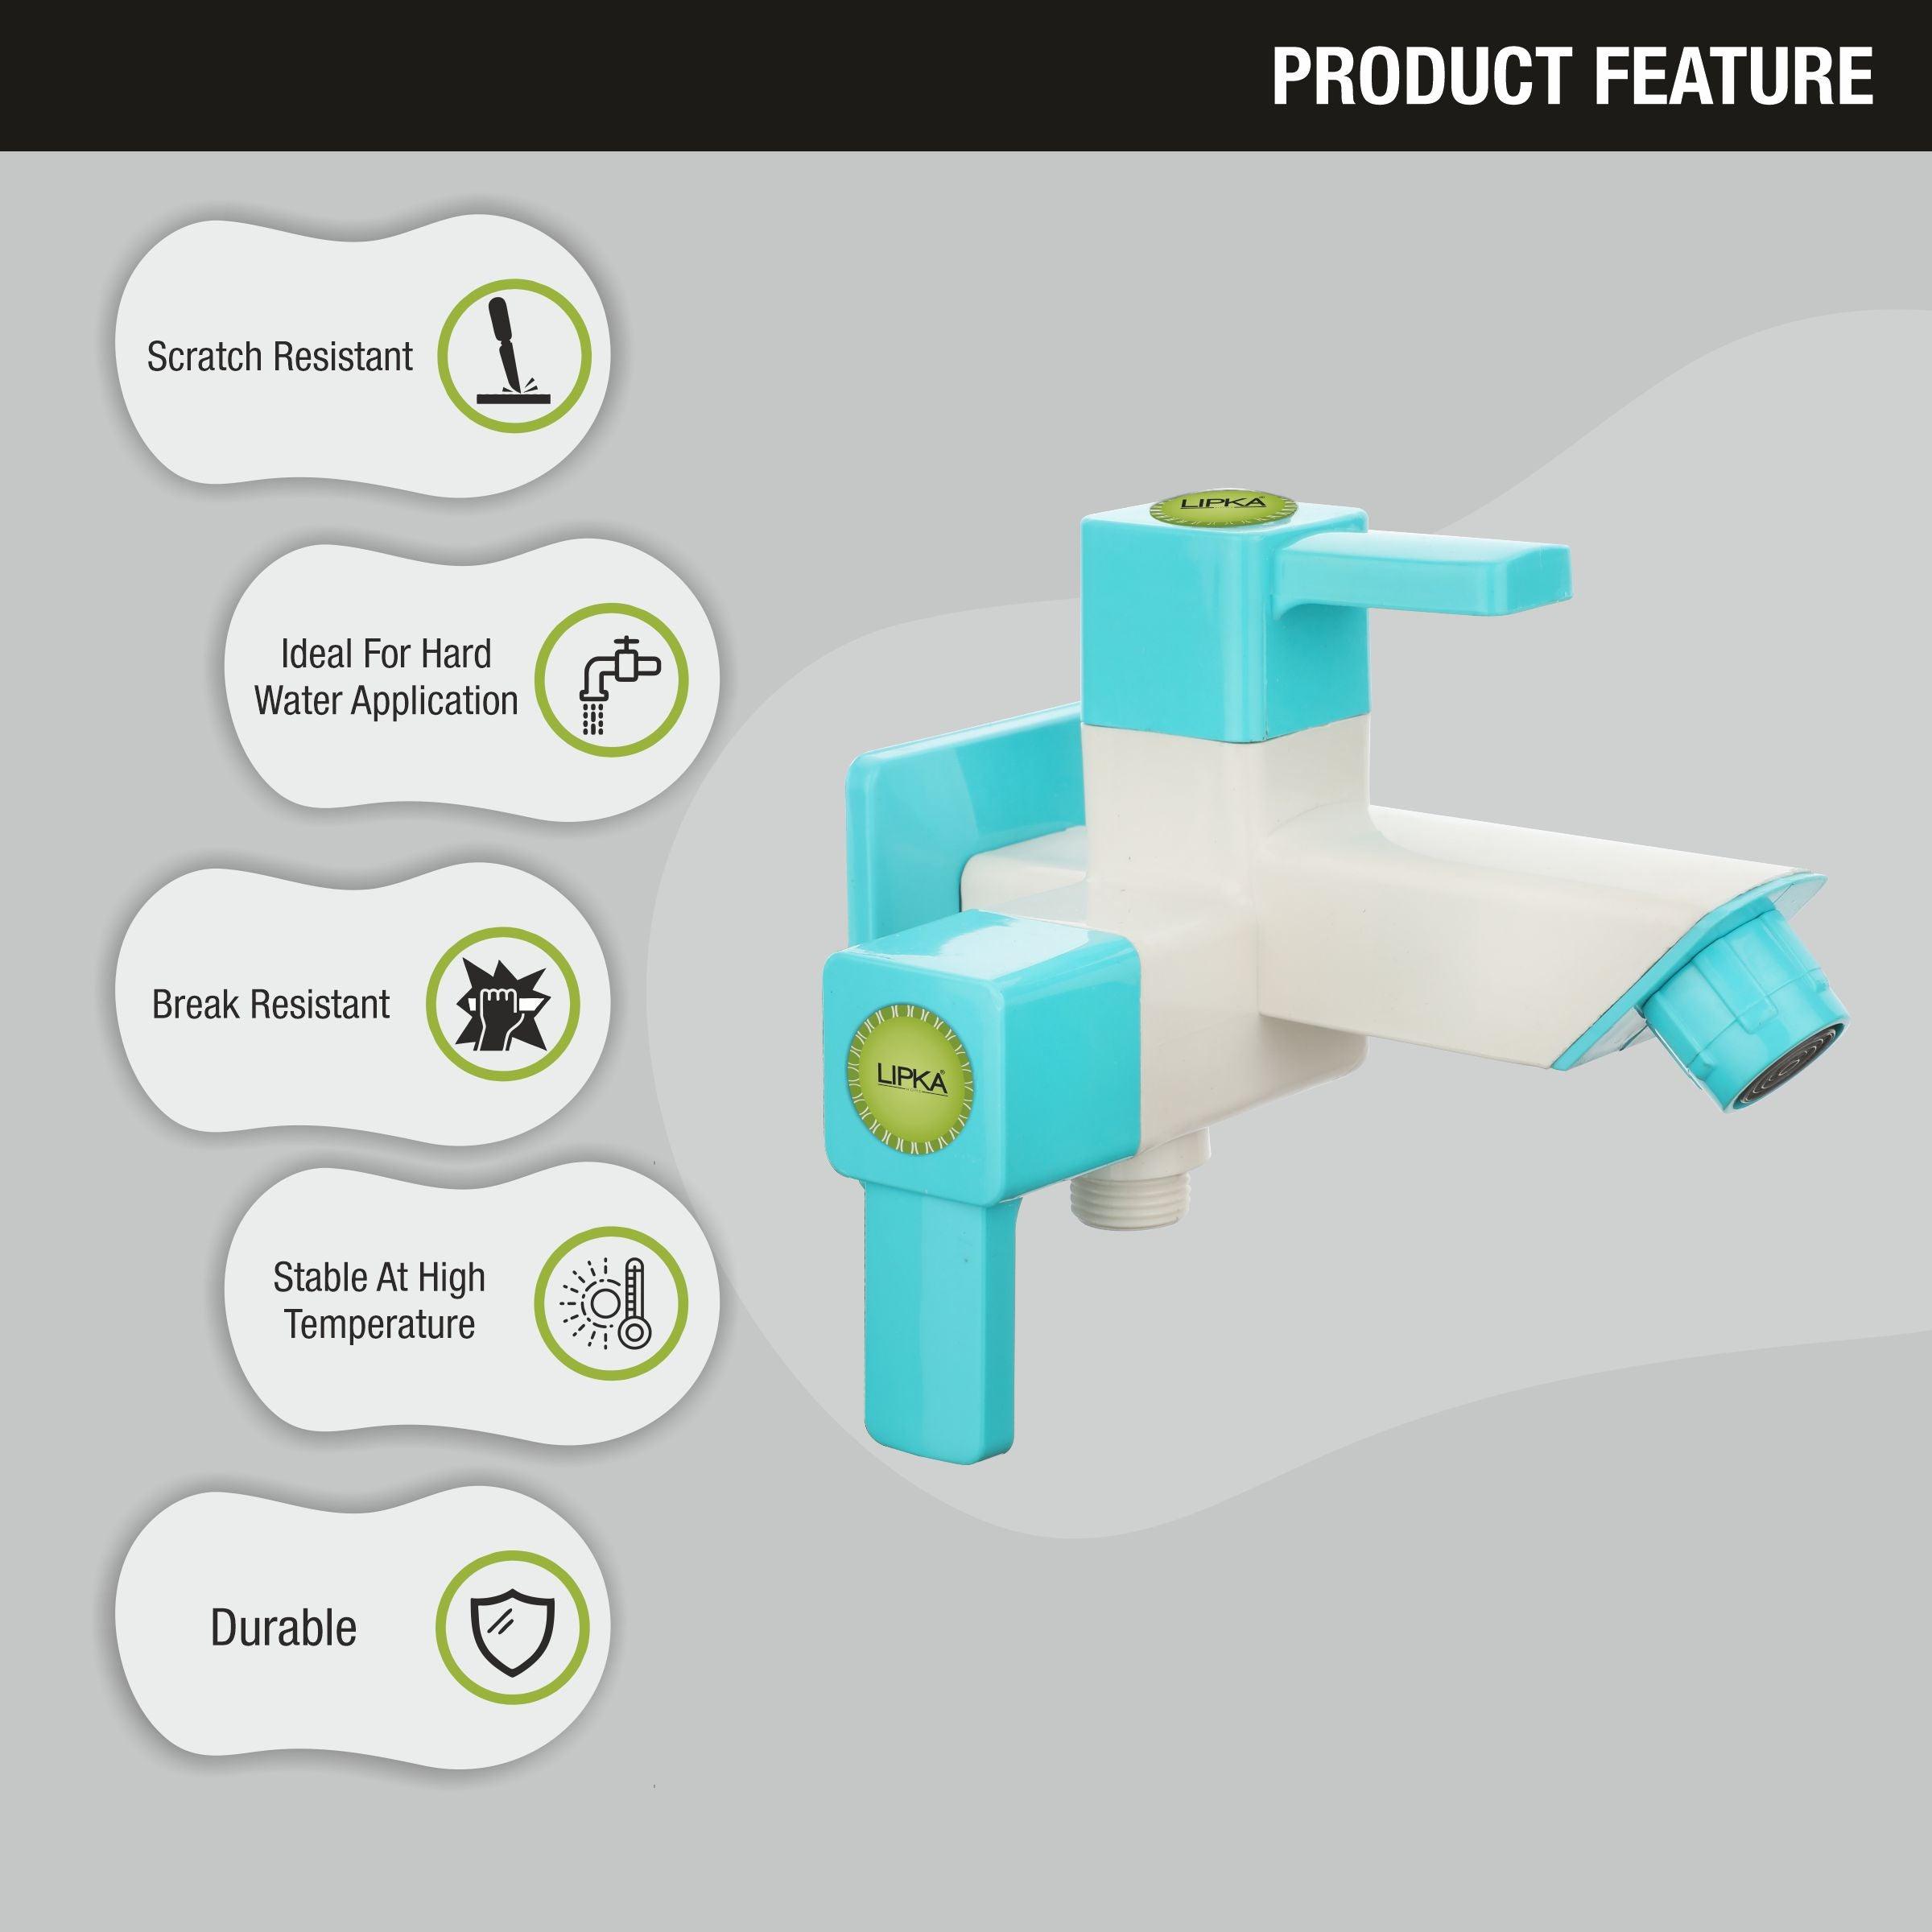 Aura Two Way Bib Tap PTMT Faucet (Double Handle) features